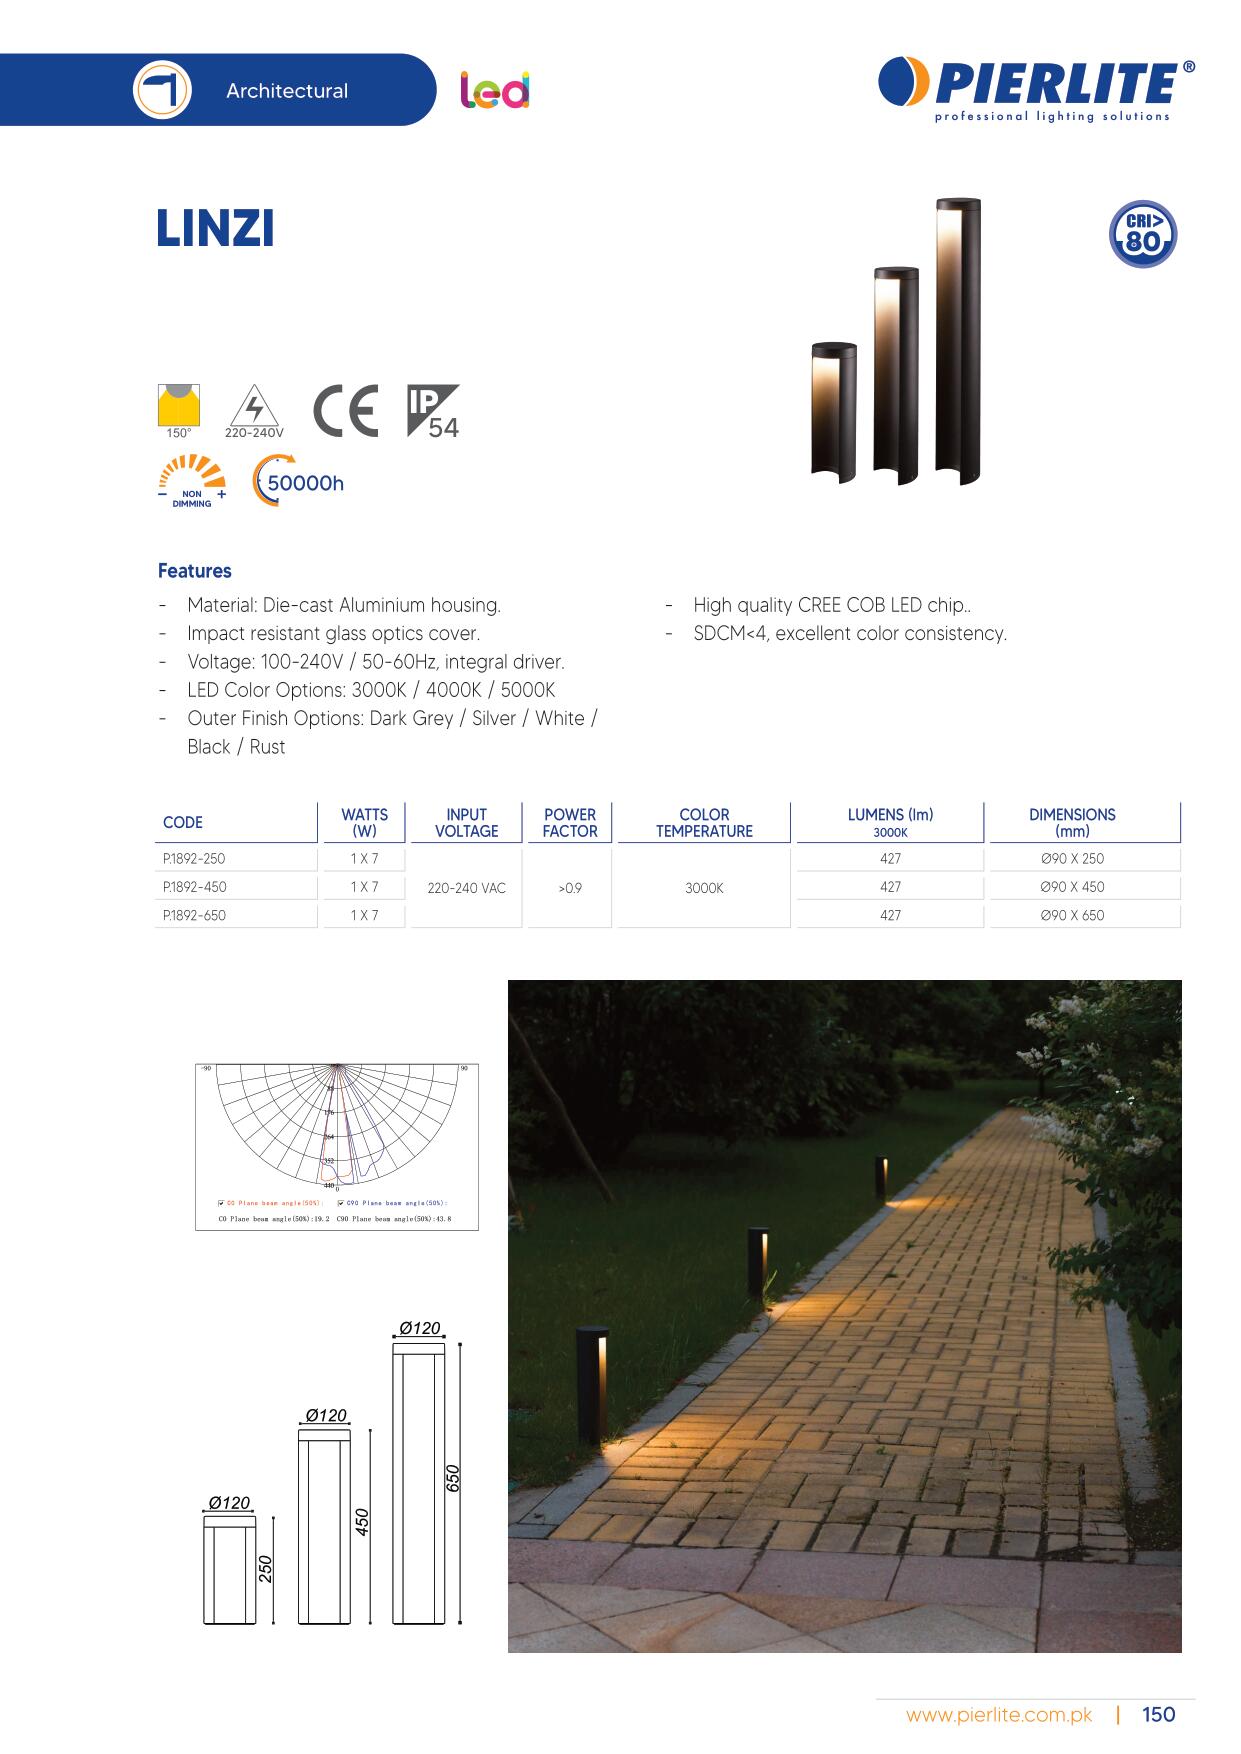 Pierlite LED Luminaire Catalog 2021-159